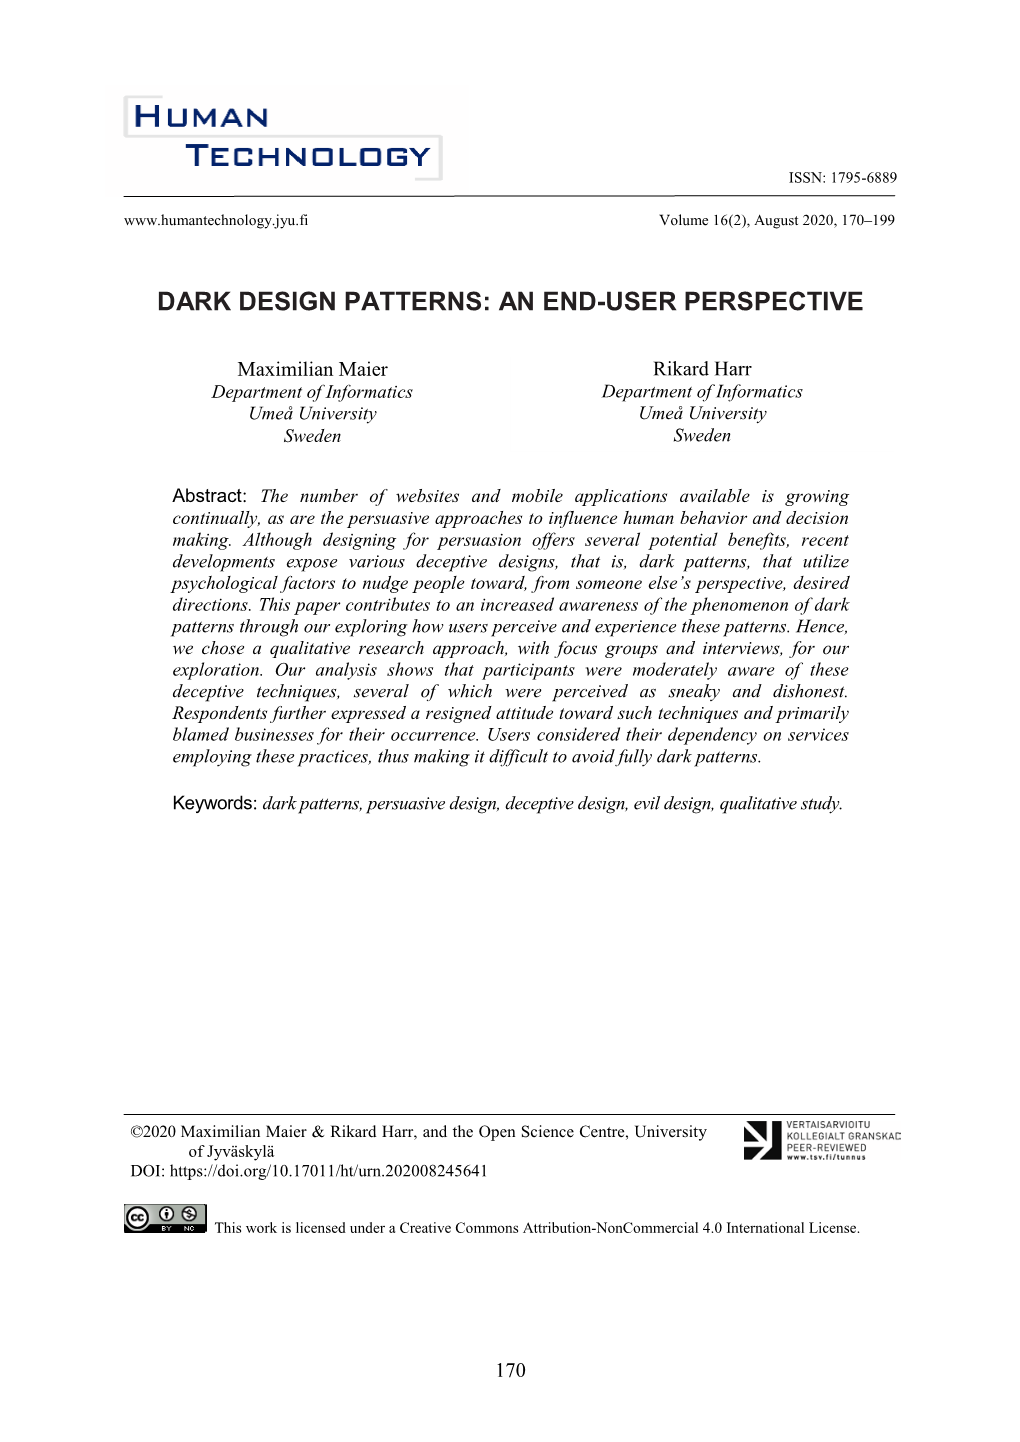 Dark Design Patterns: an End User Perspective